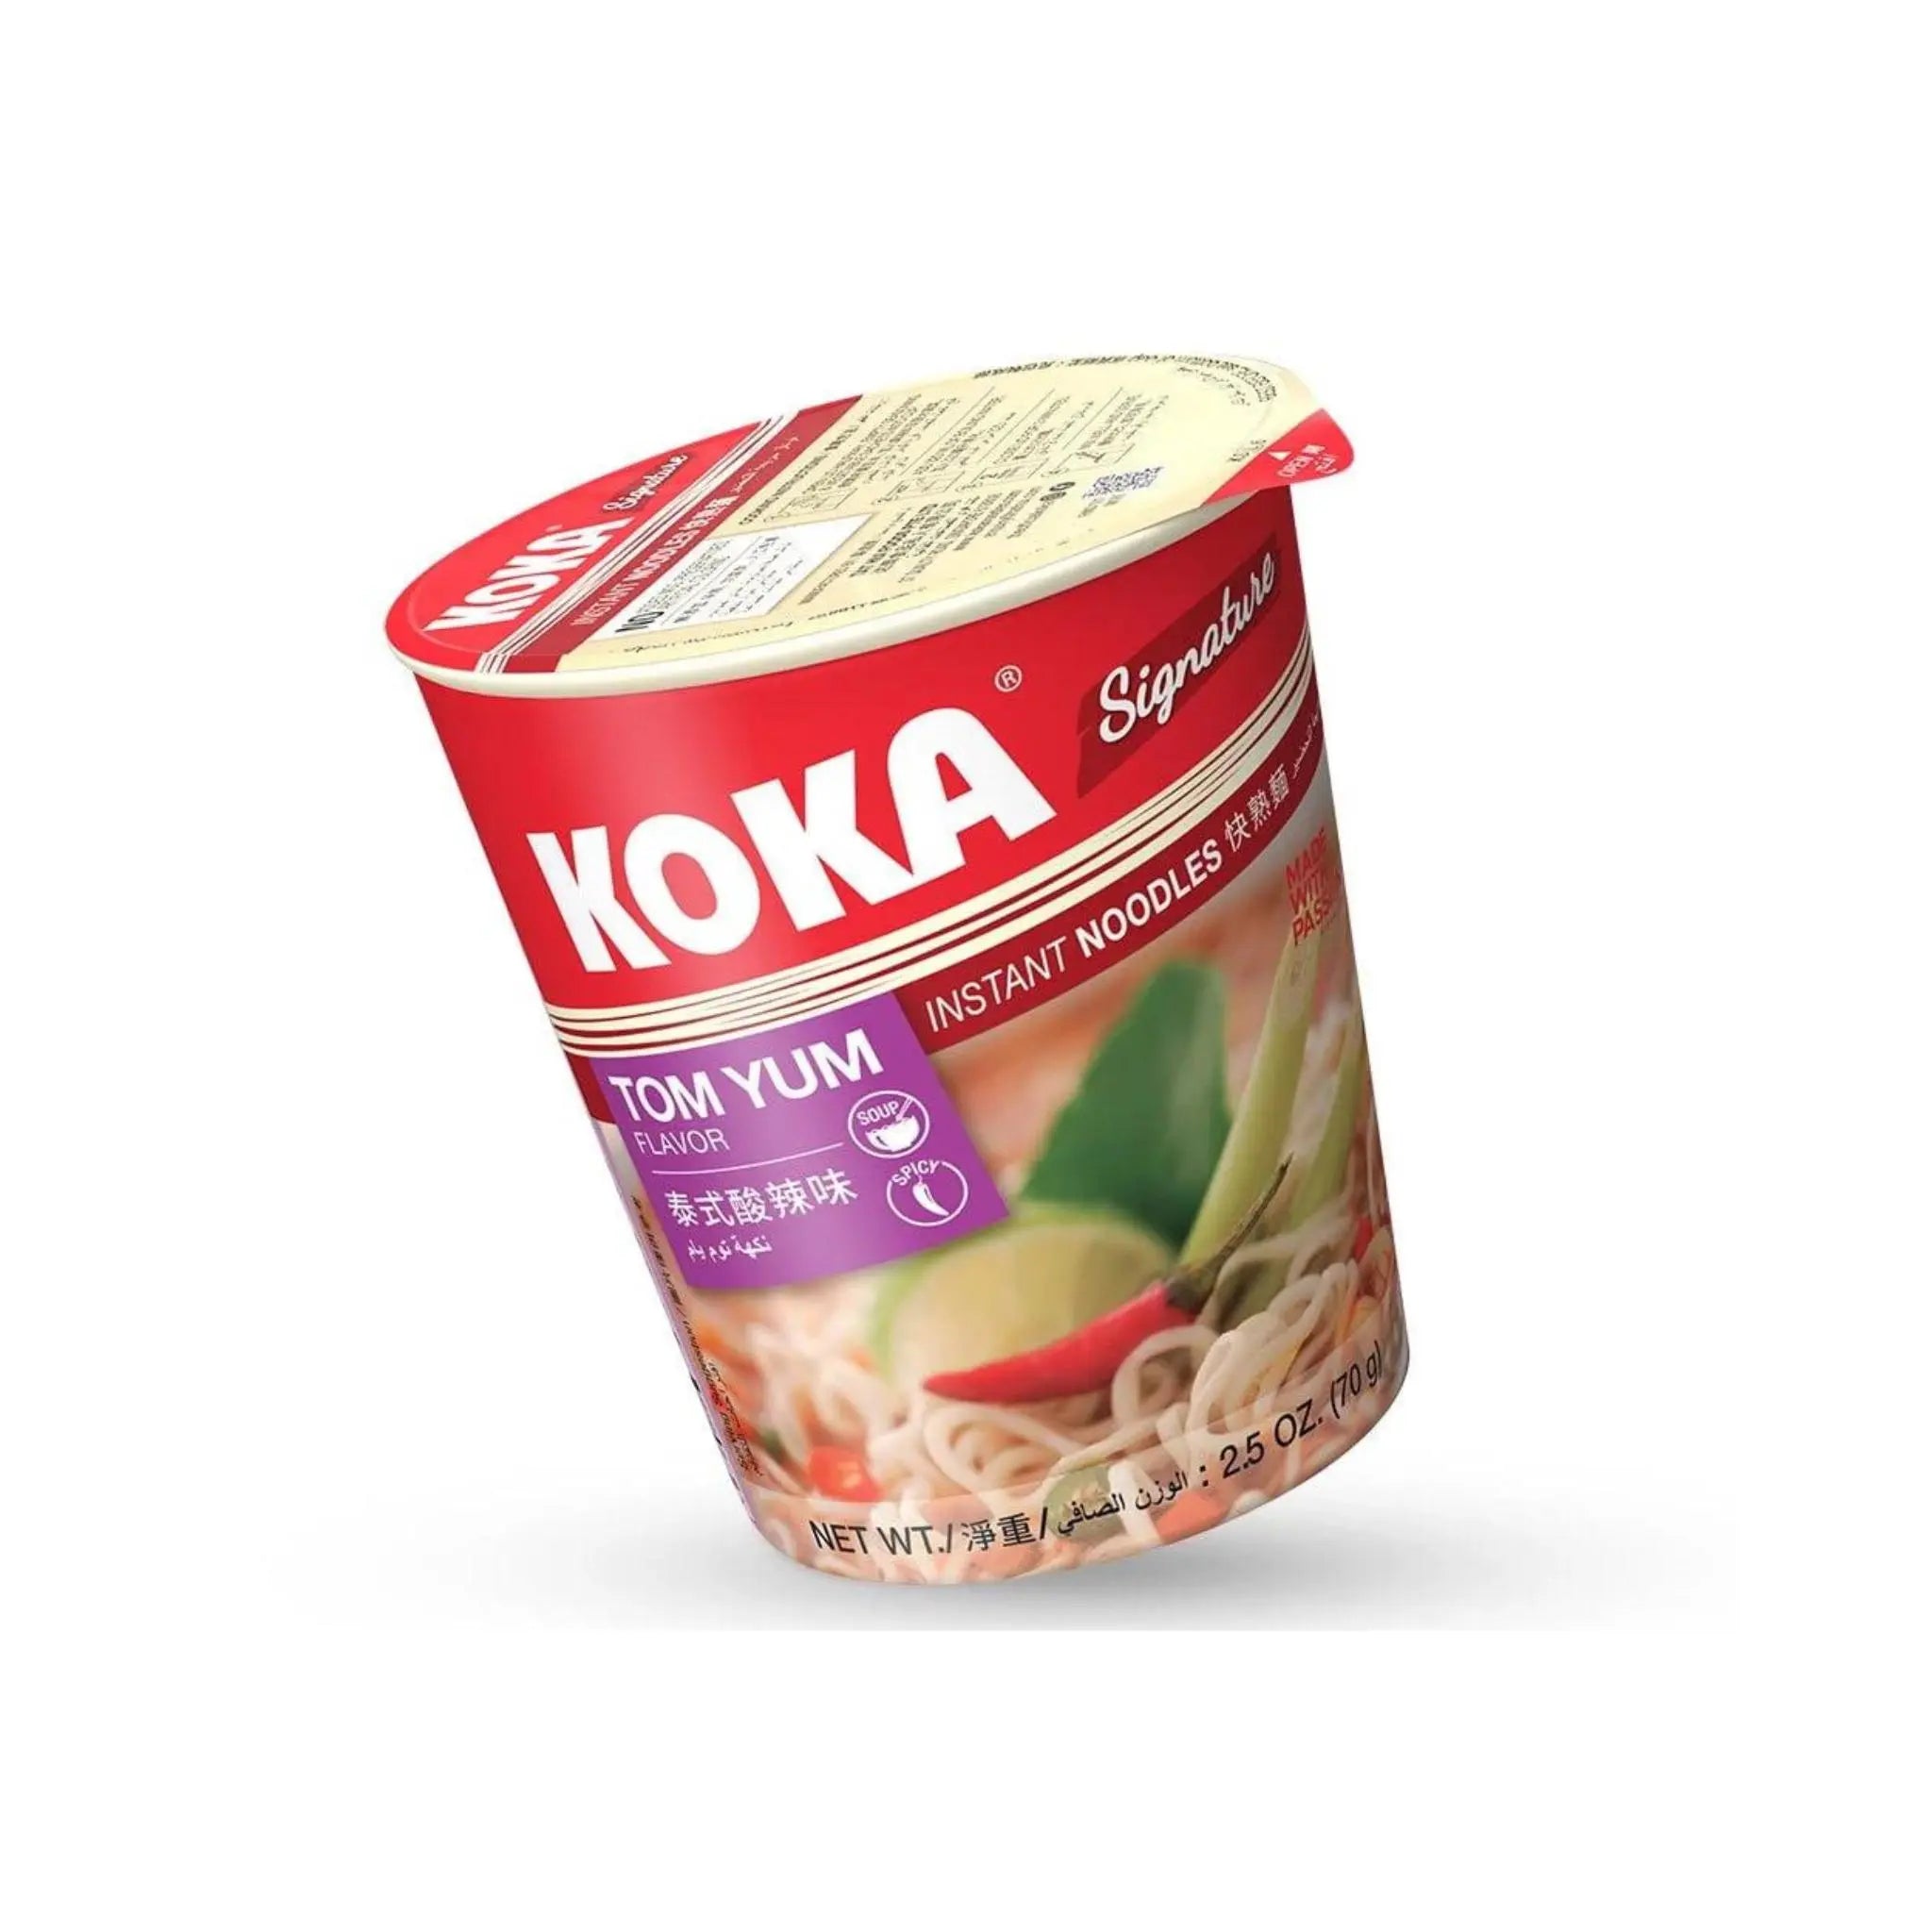 Koka Cup Noodles Tom Yam Shrimp (24X70Gm) Koka